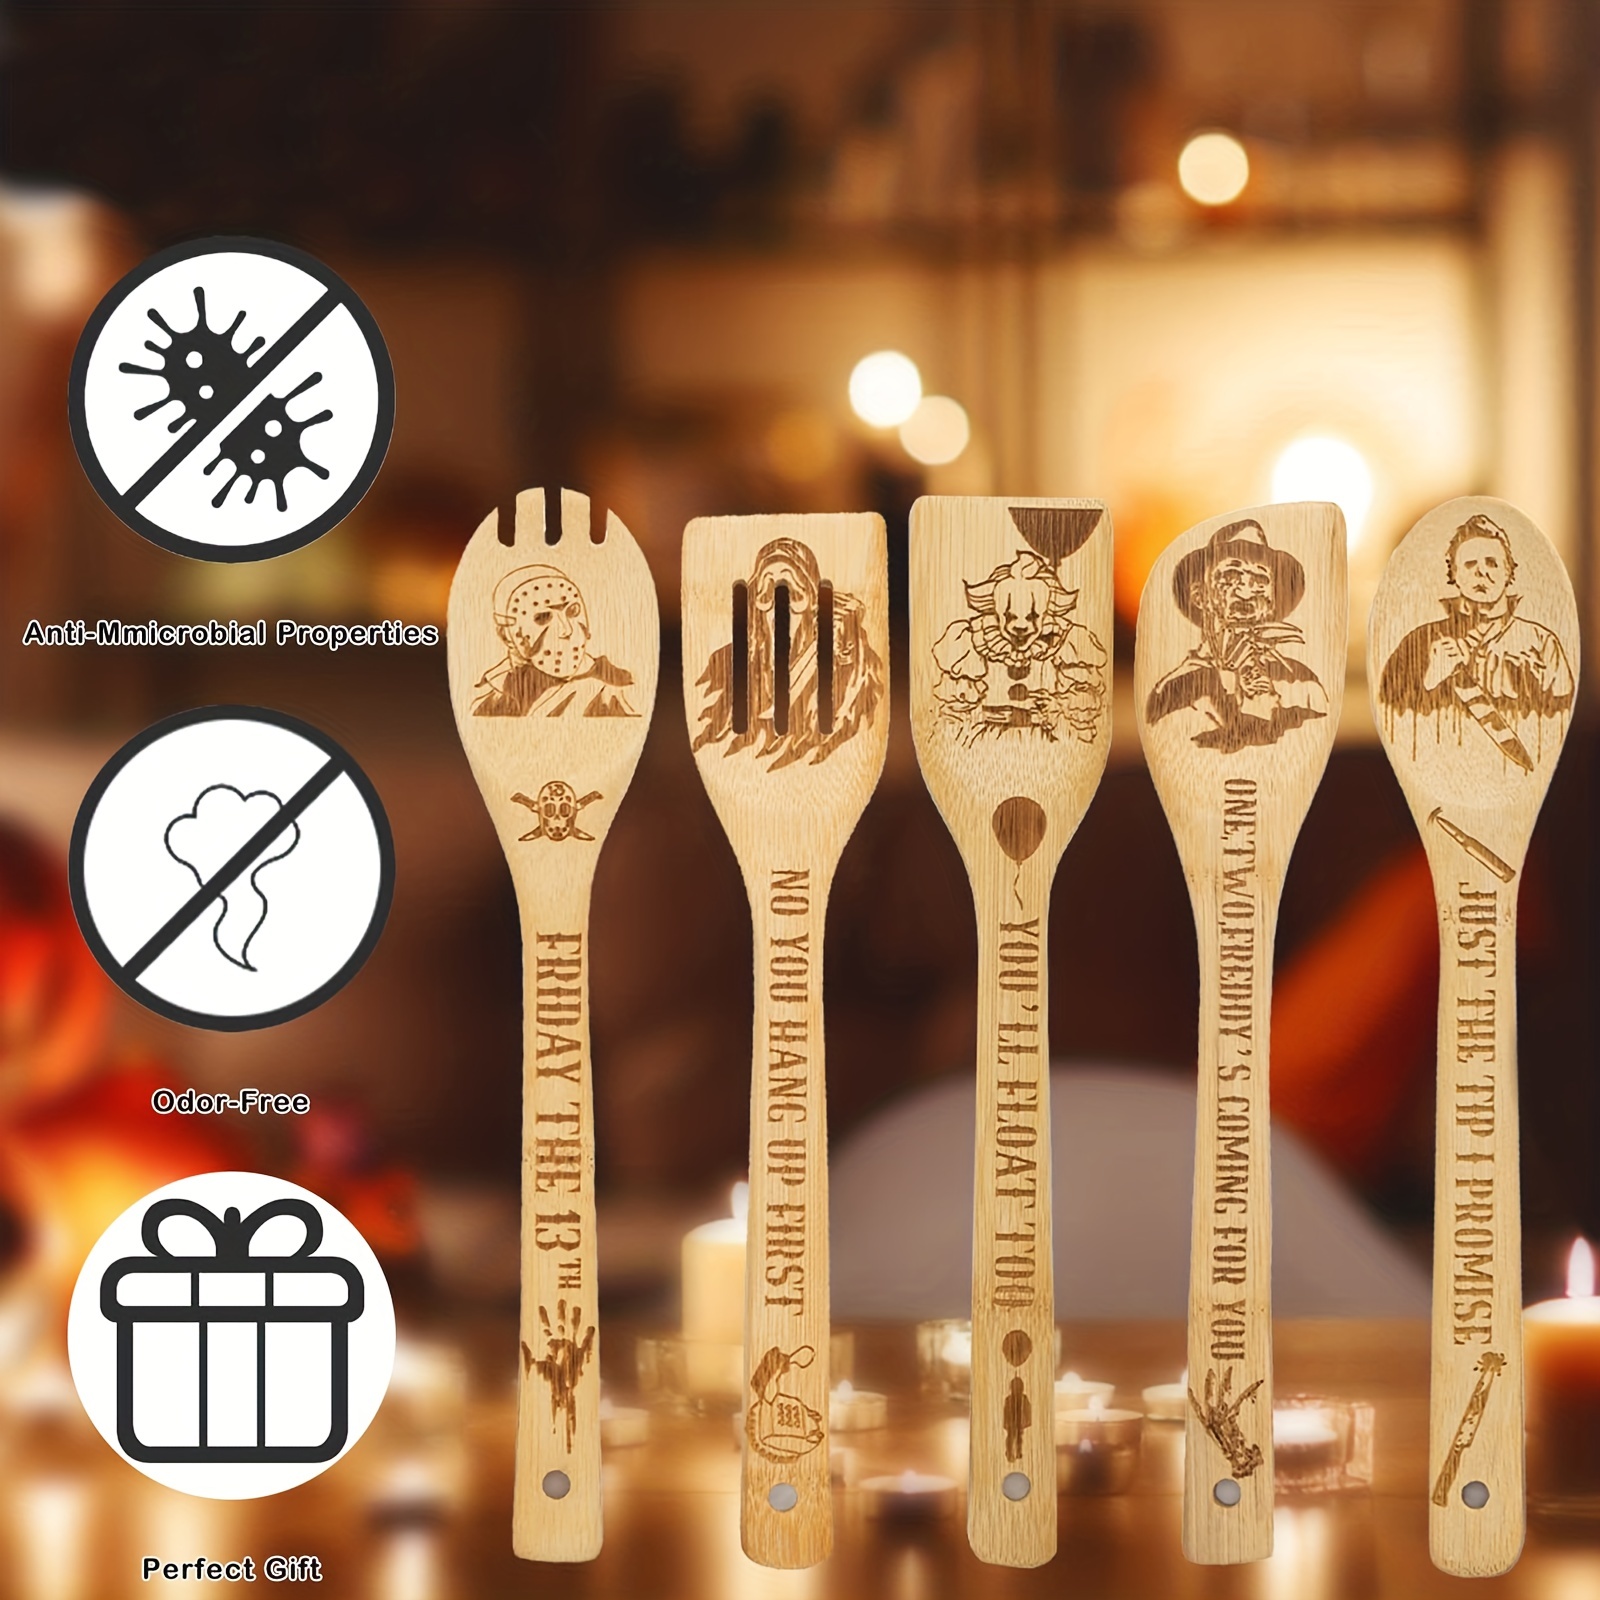 Bamboo Kitchenware Gift Ideas